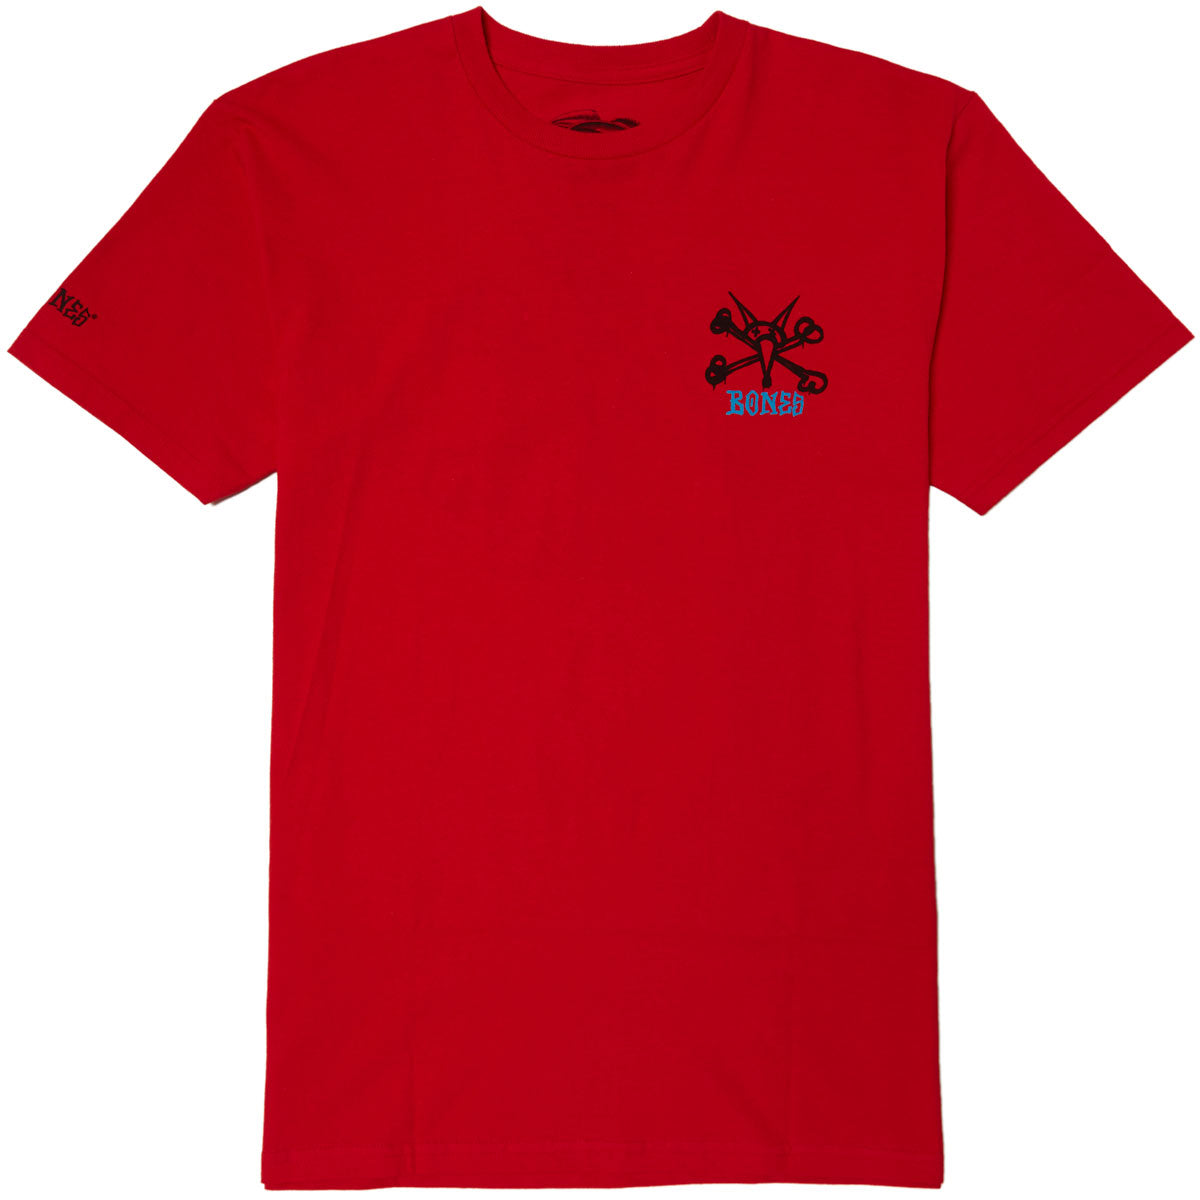 Powell-Peralta Rat Bones T-Shirt - Red image 2